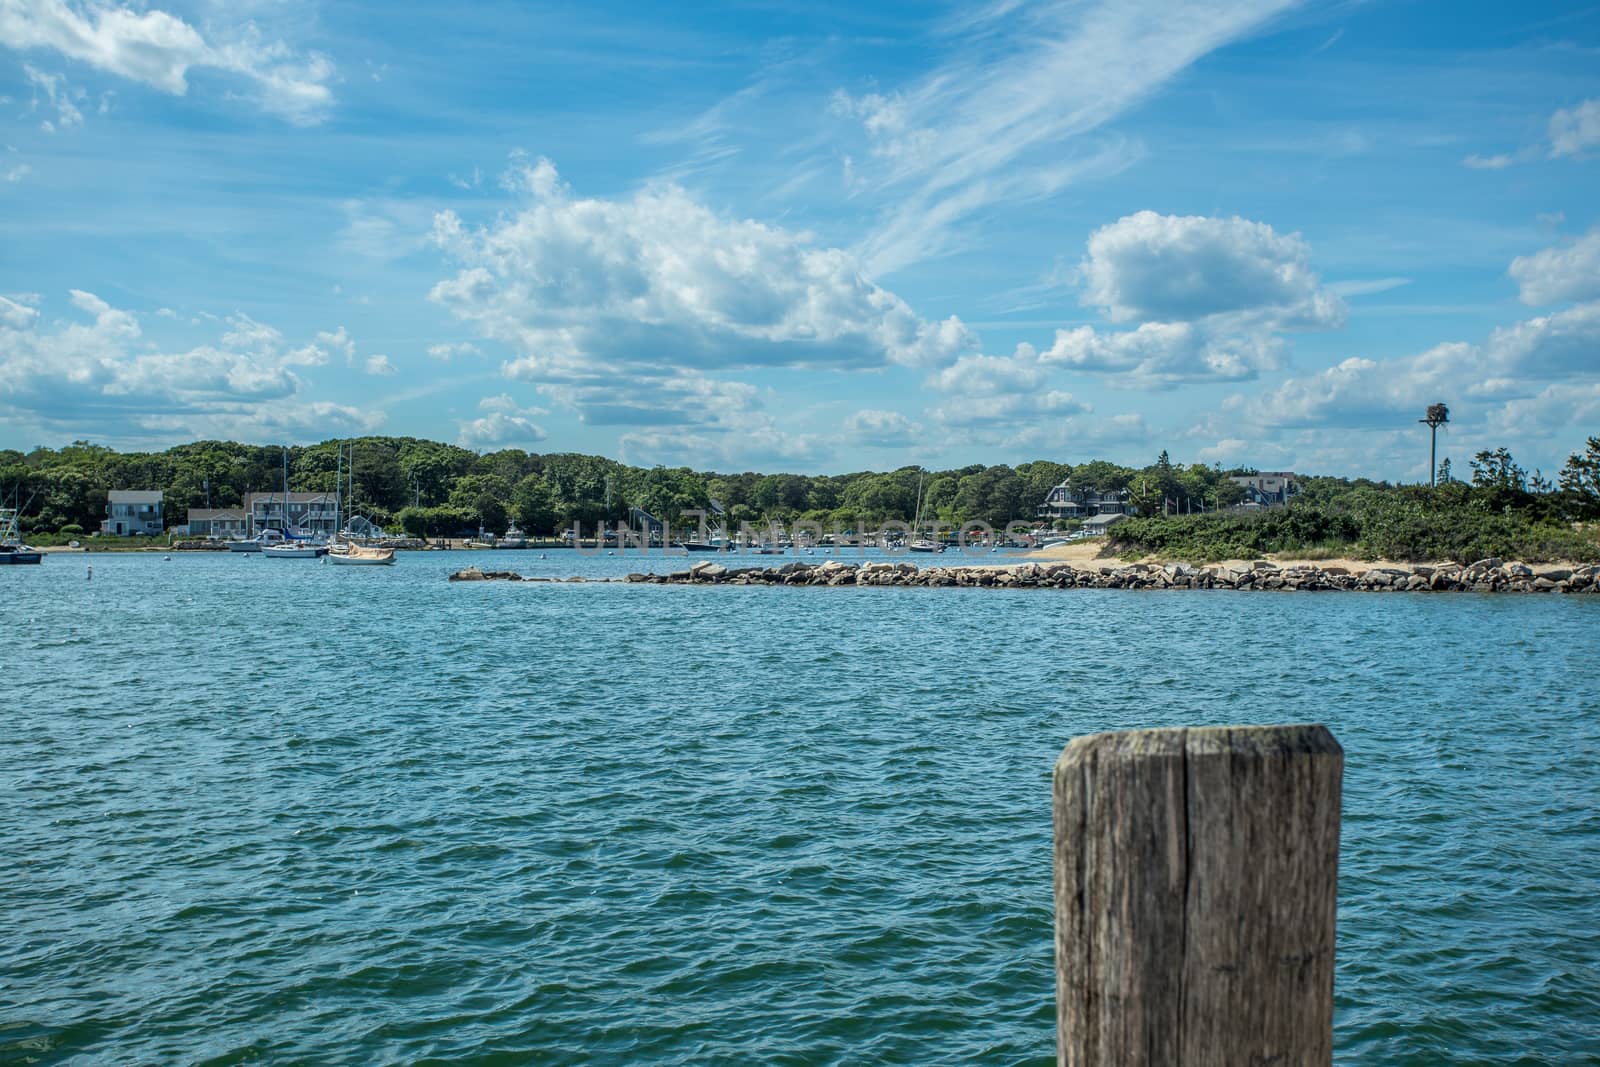 A view of Oak Bluffs Harbor on Martha's Vineyard Massachusetts from Vineyard Sound.